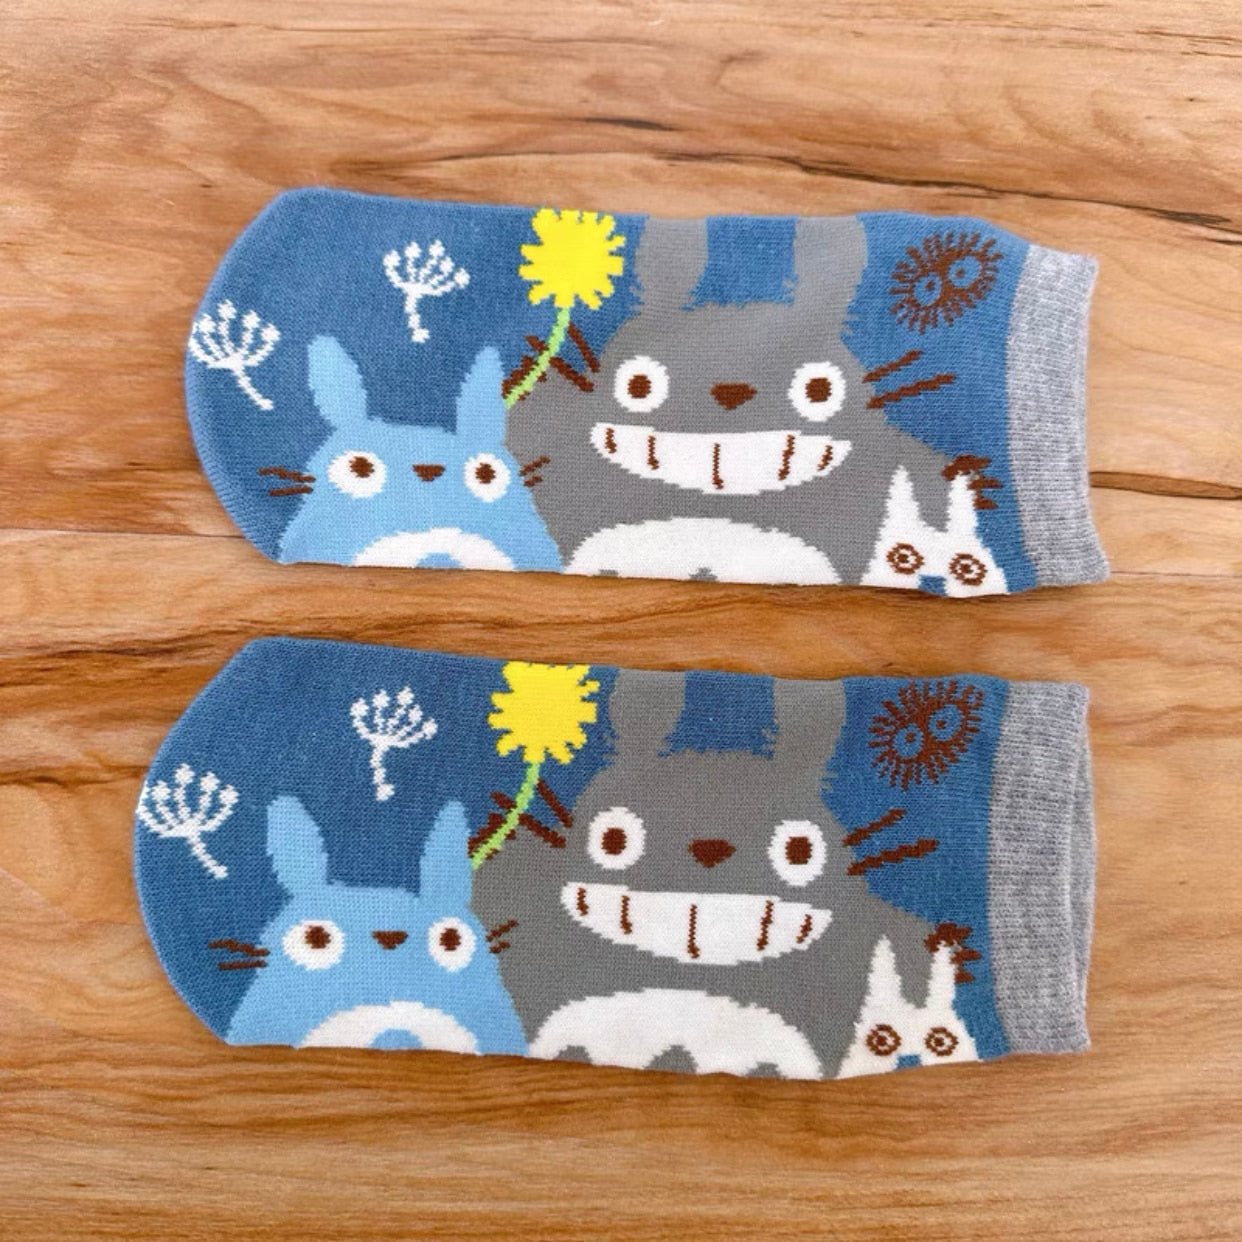 Studio Ghibli Socks